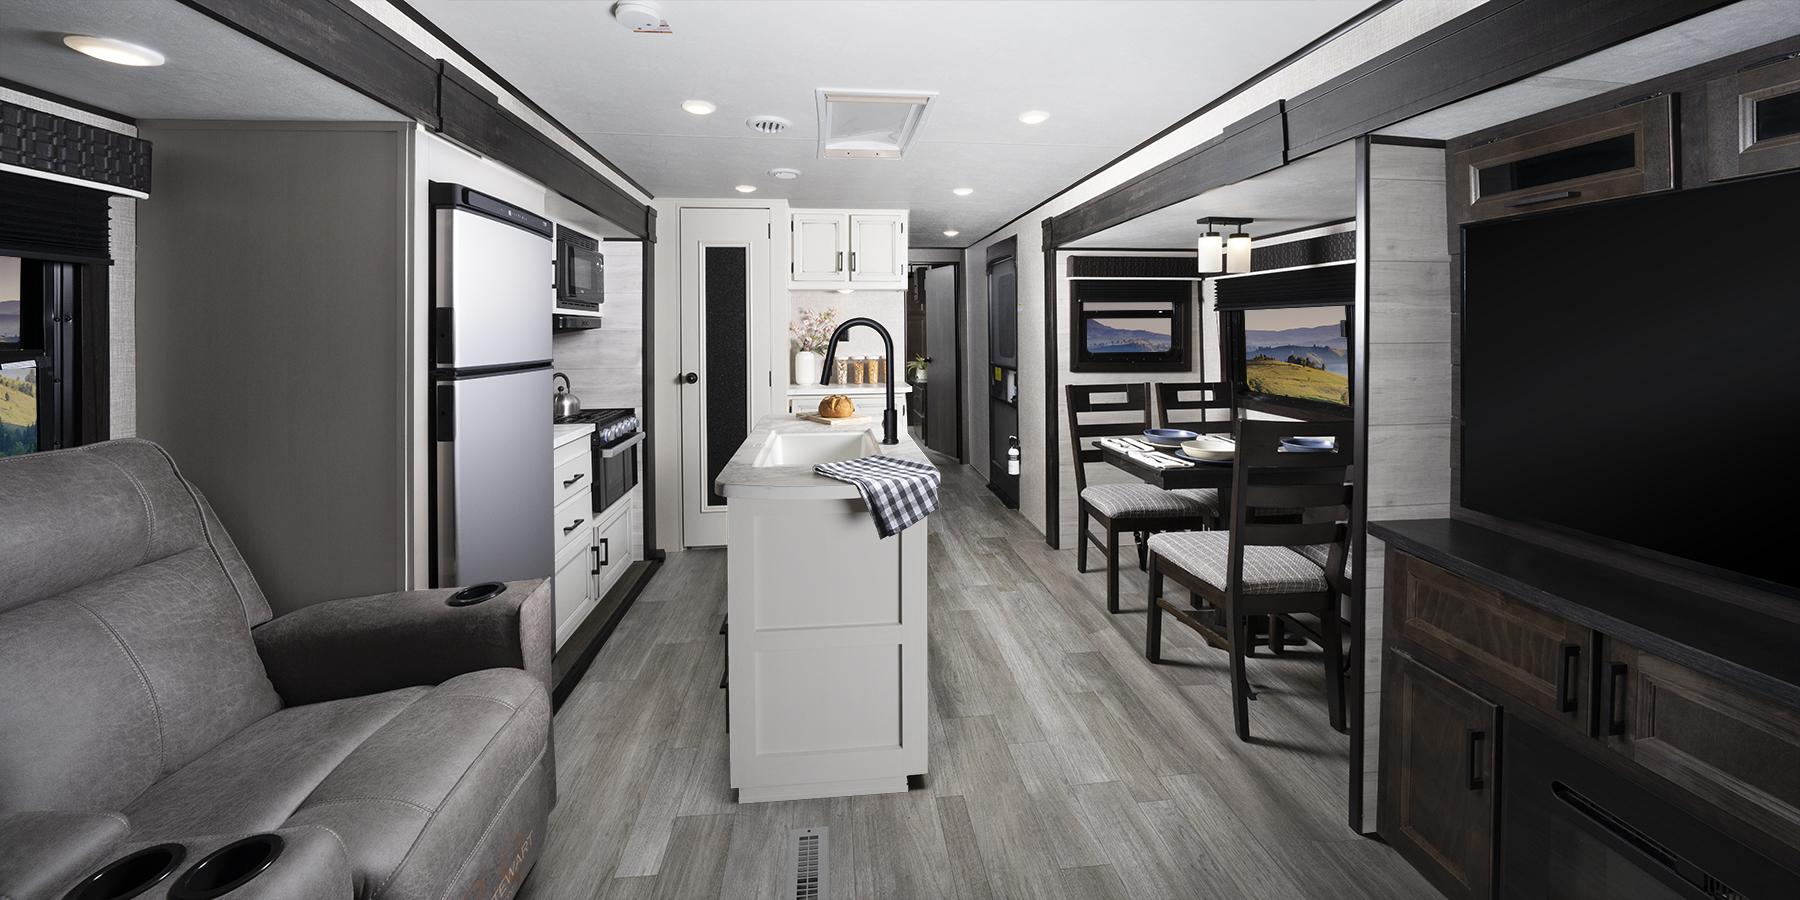 2022 front living travel trailer